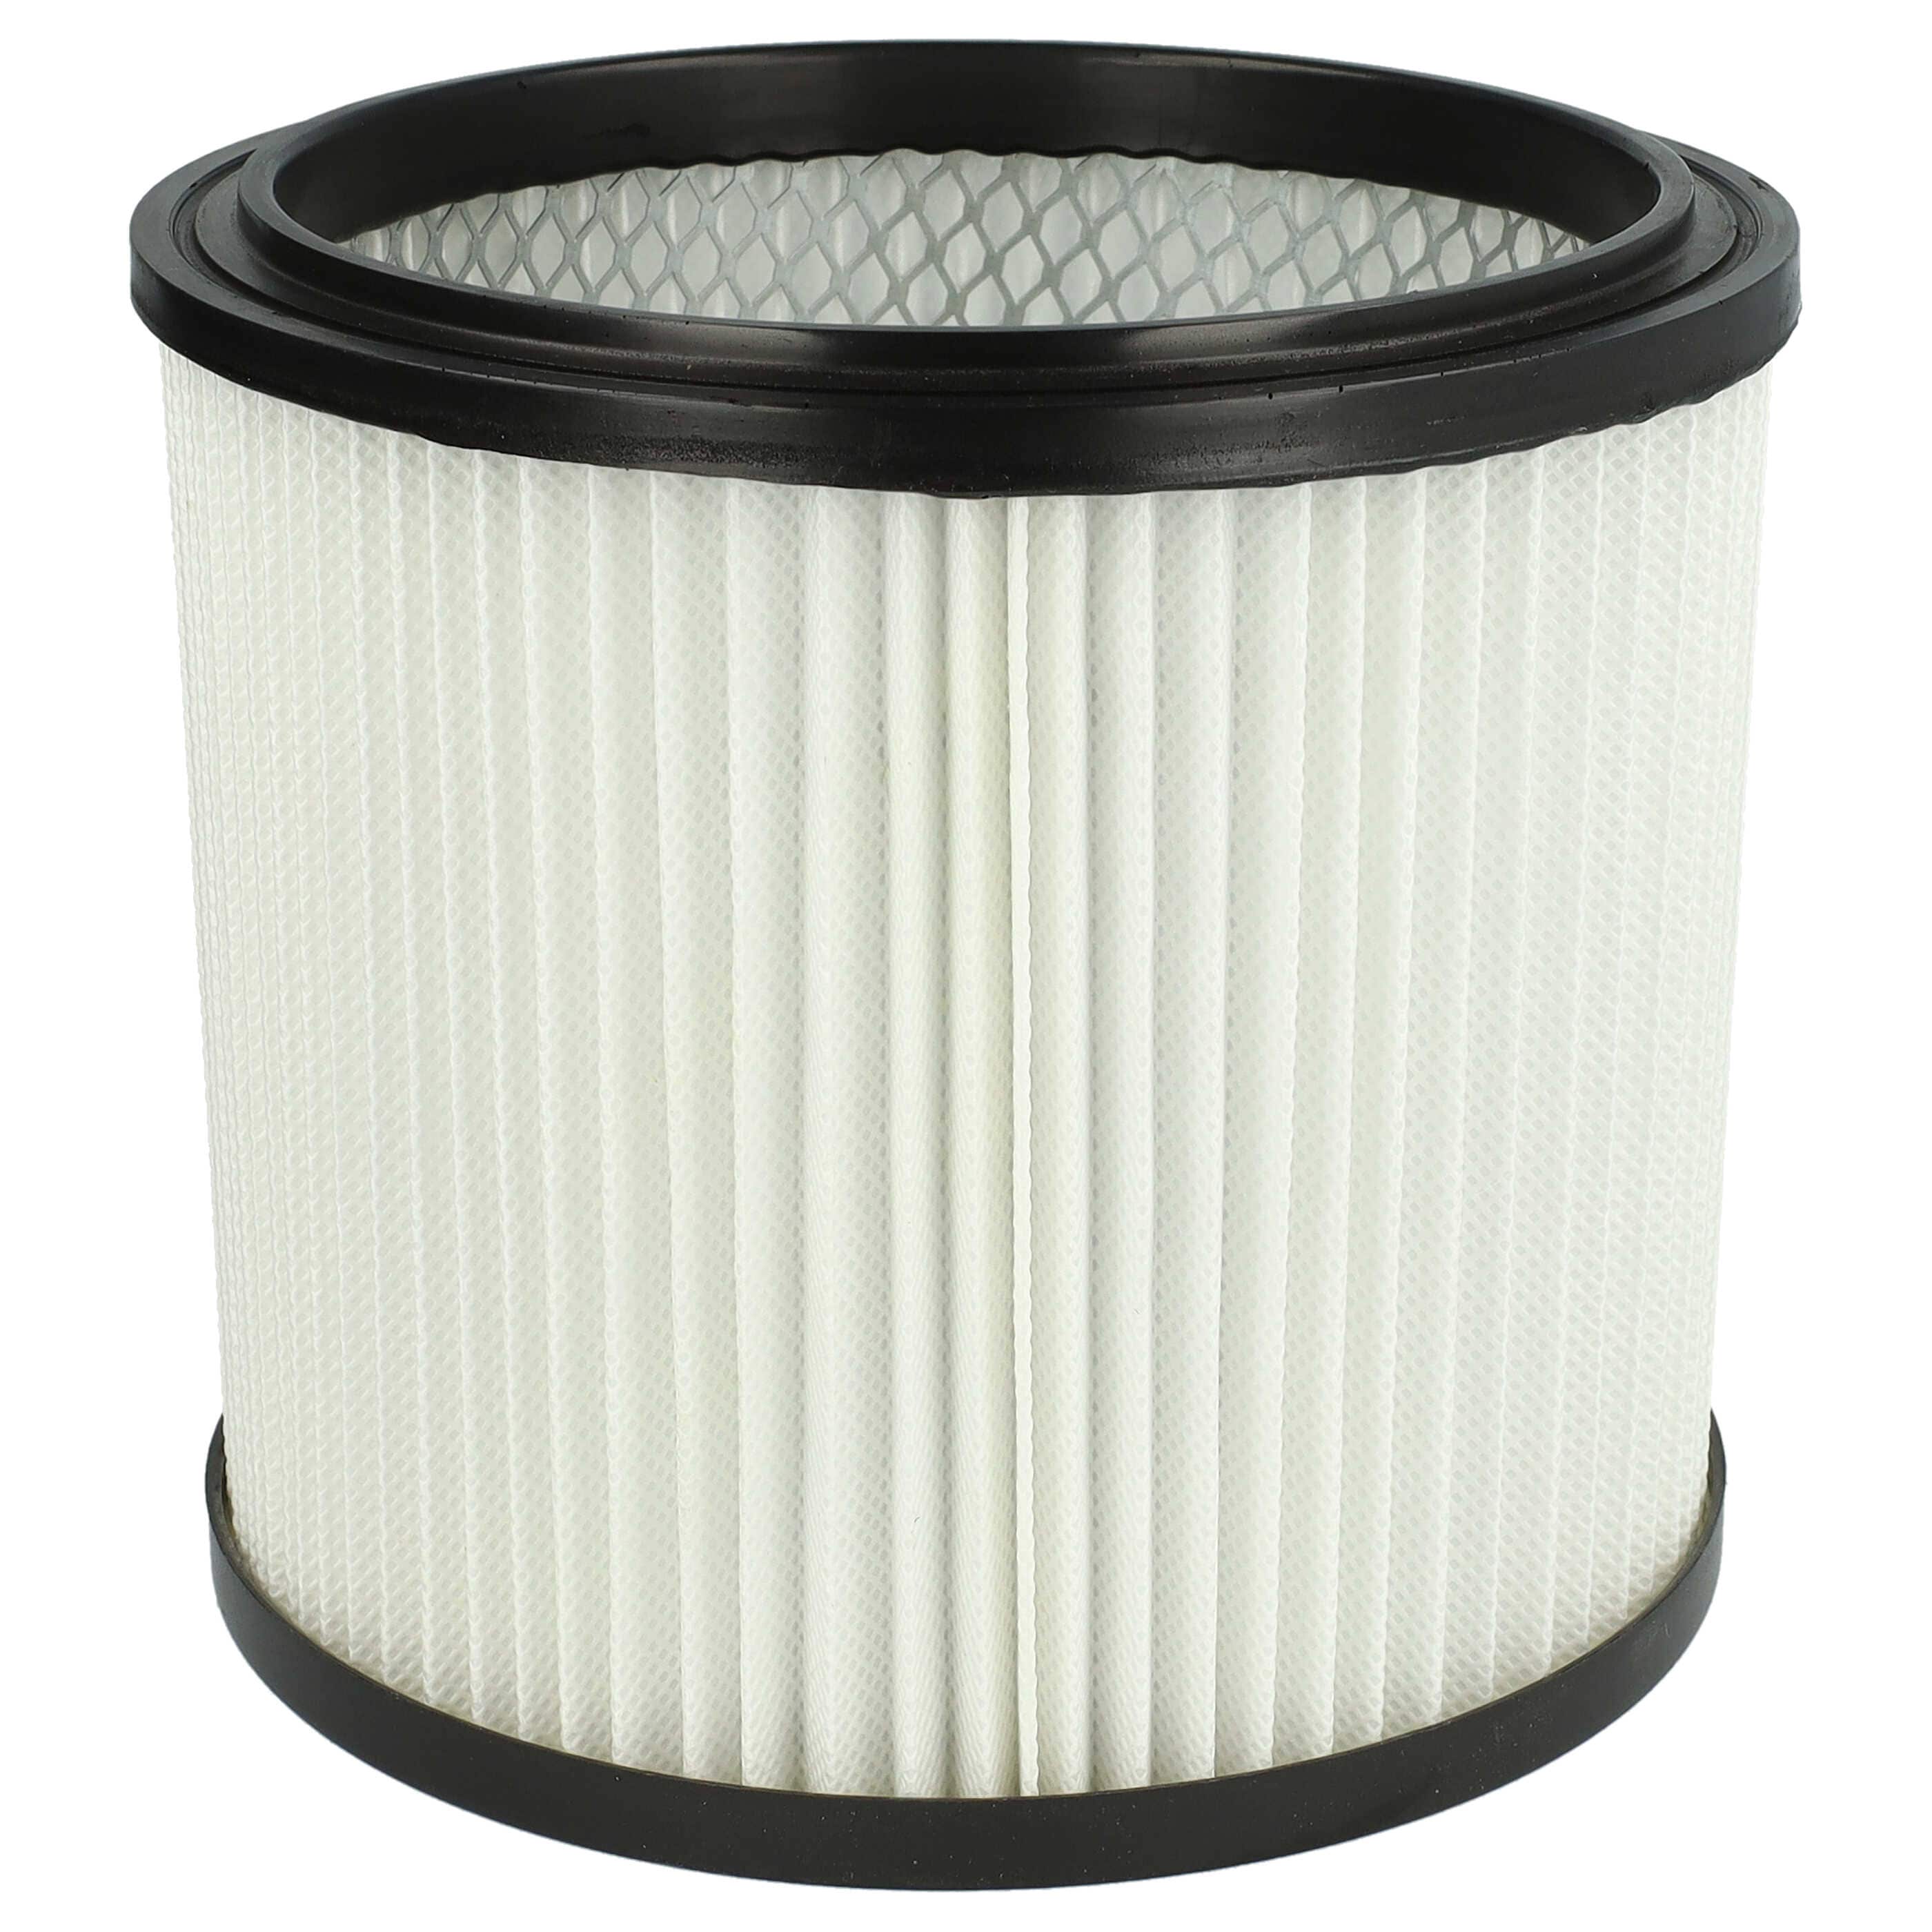 Filtro reemplaza Einhell 2351110 para aspiradora - filtro de cartucho, negro / blanco